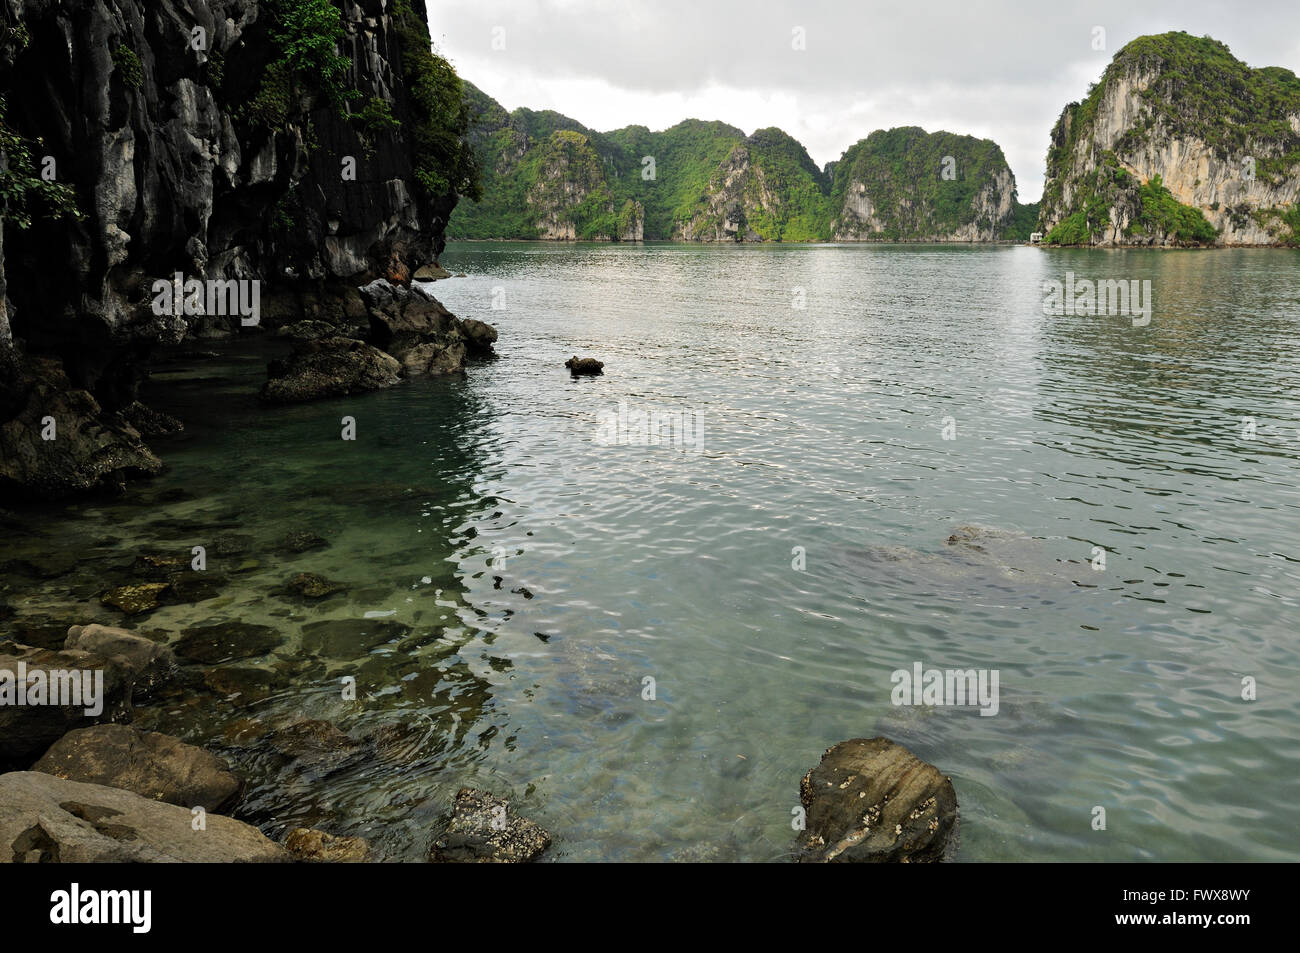 Wild Cove dans la zone Bai Tu Long de la baie de Ha Long, Province de Quang Ninh, Vietnam Banque D'Images